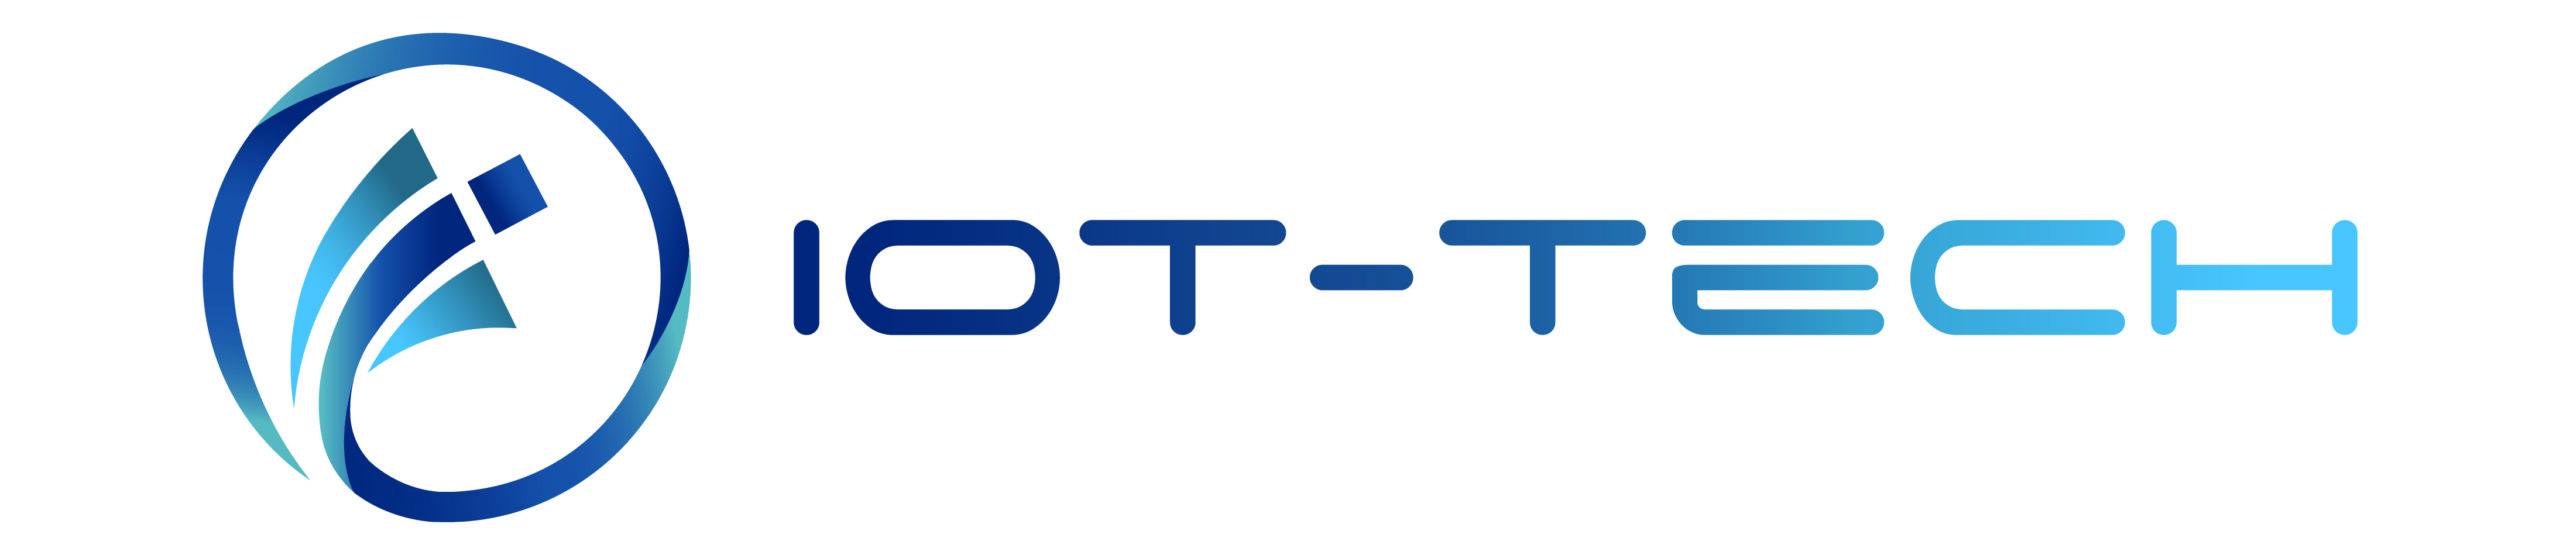 IOT-Tech